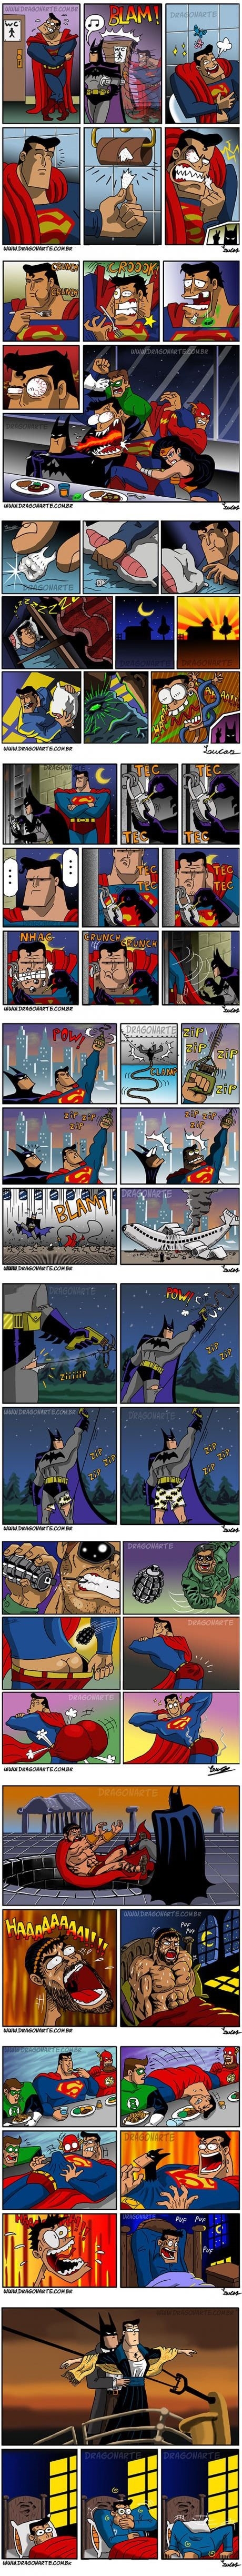 Batman part 2